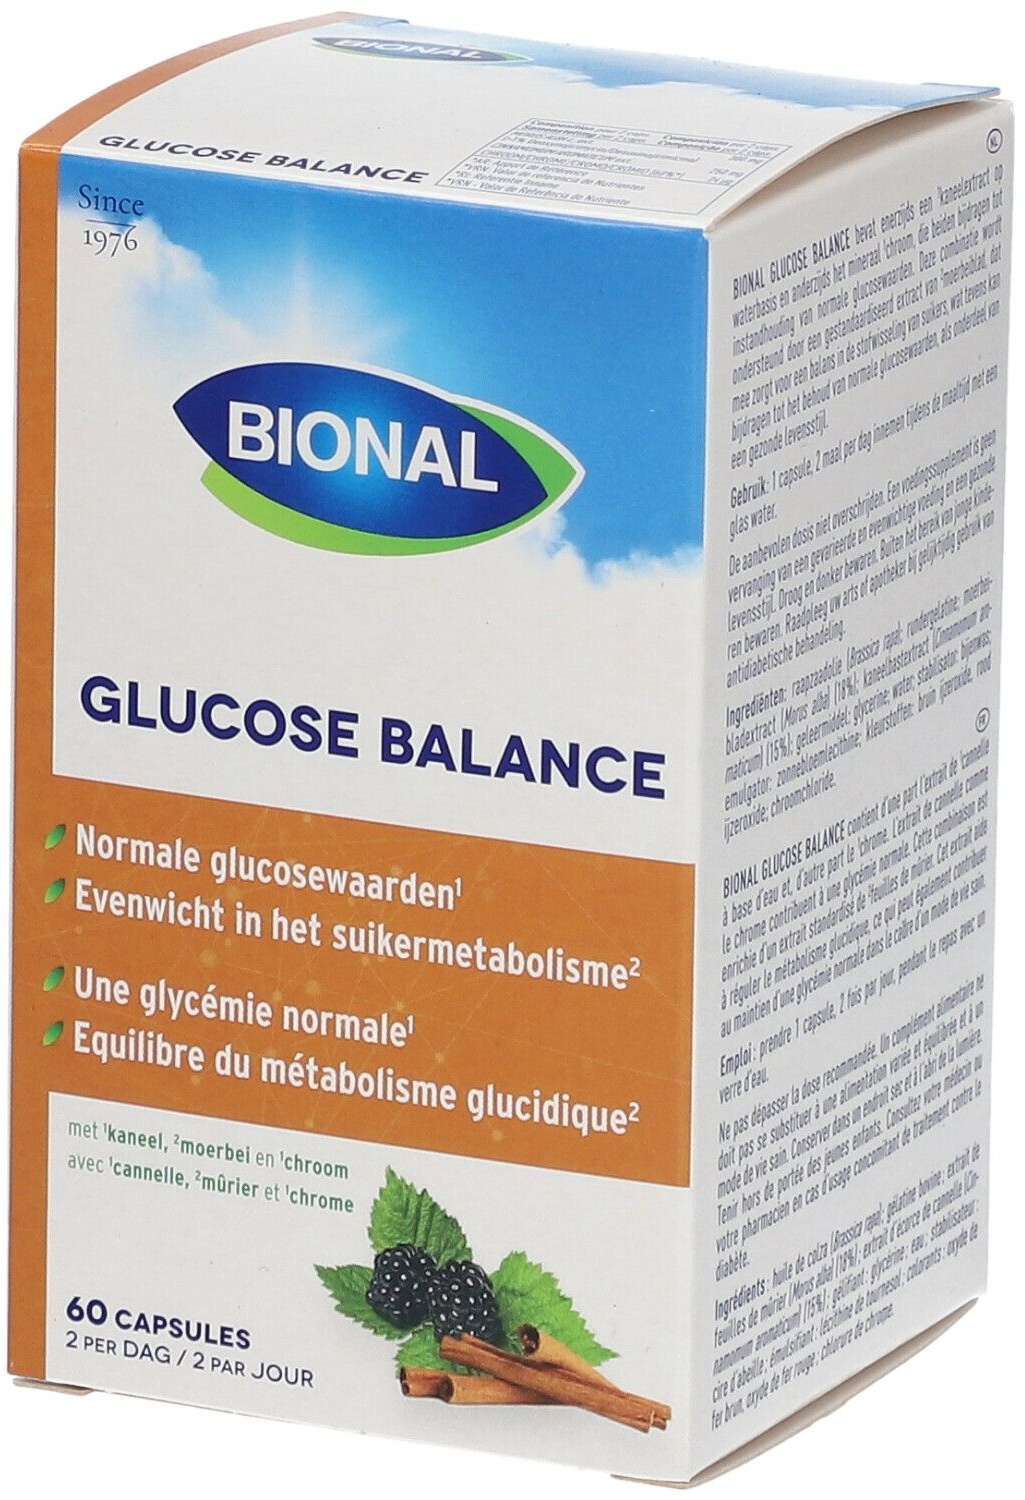 Bional Glucose Balance 60 pc(s) capsule(s)